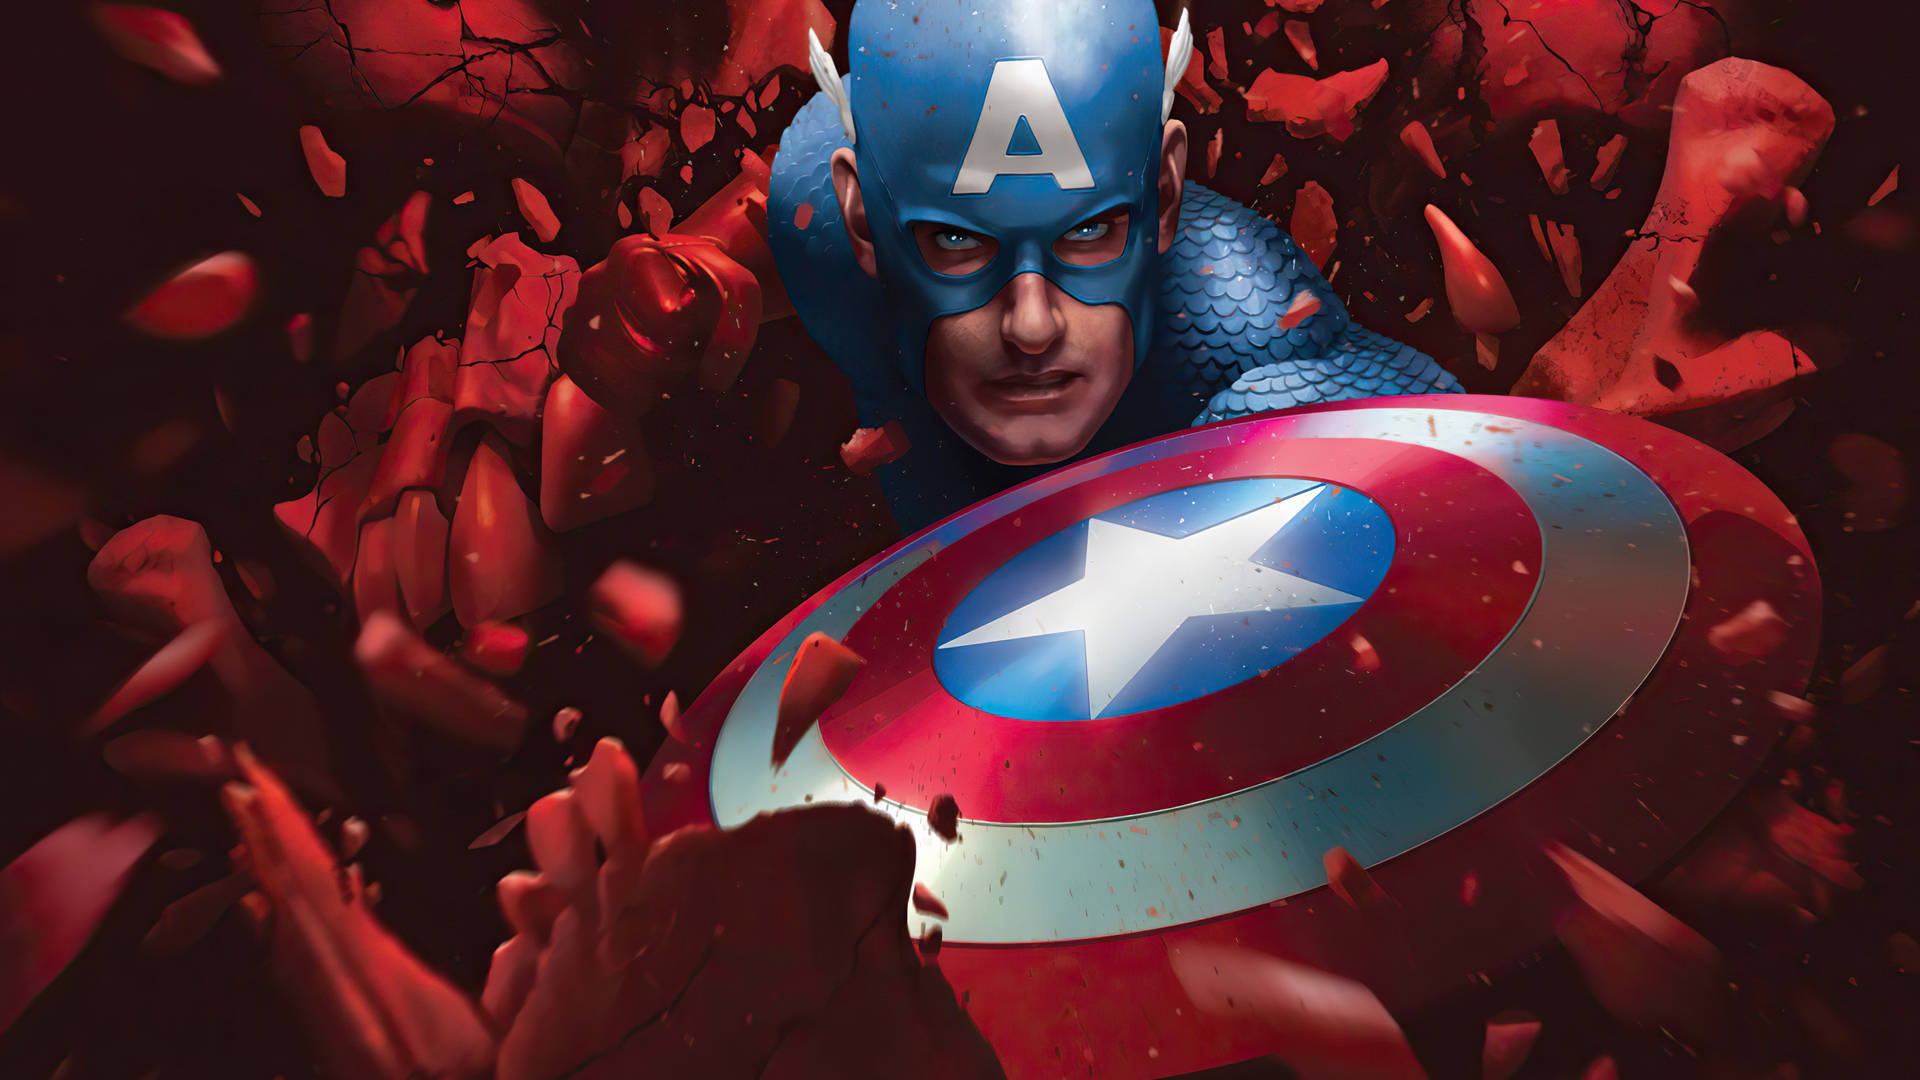 Free Captain America Wallpaper Downloads, [300+] Captain America Wallpapers  for FREE 